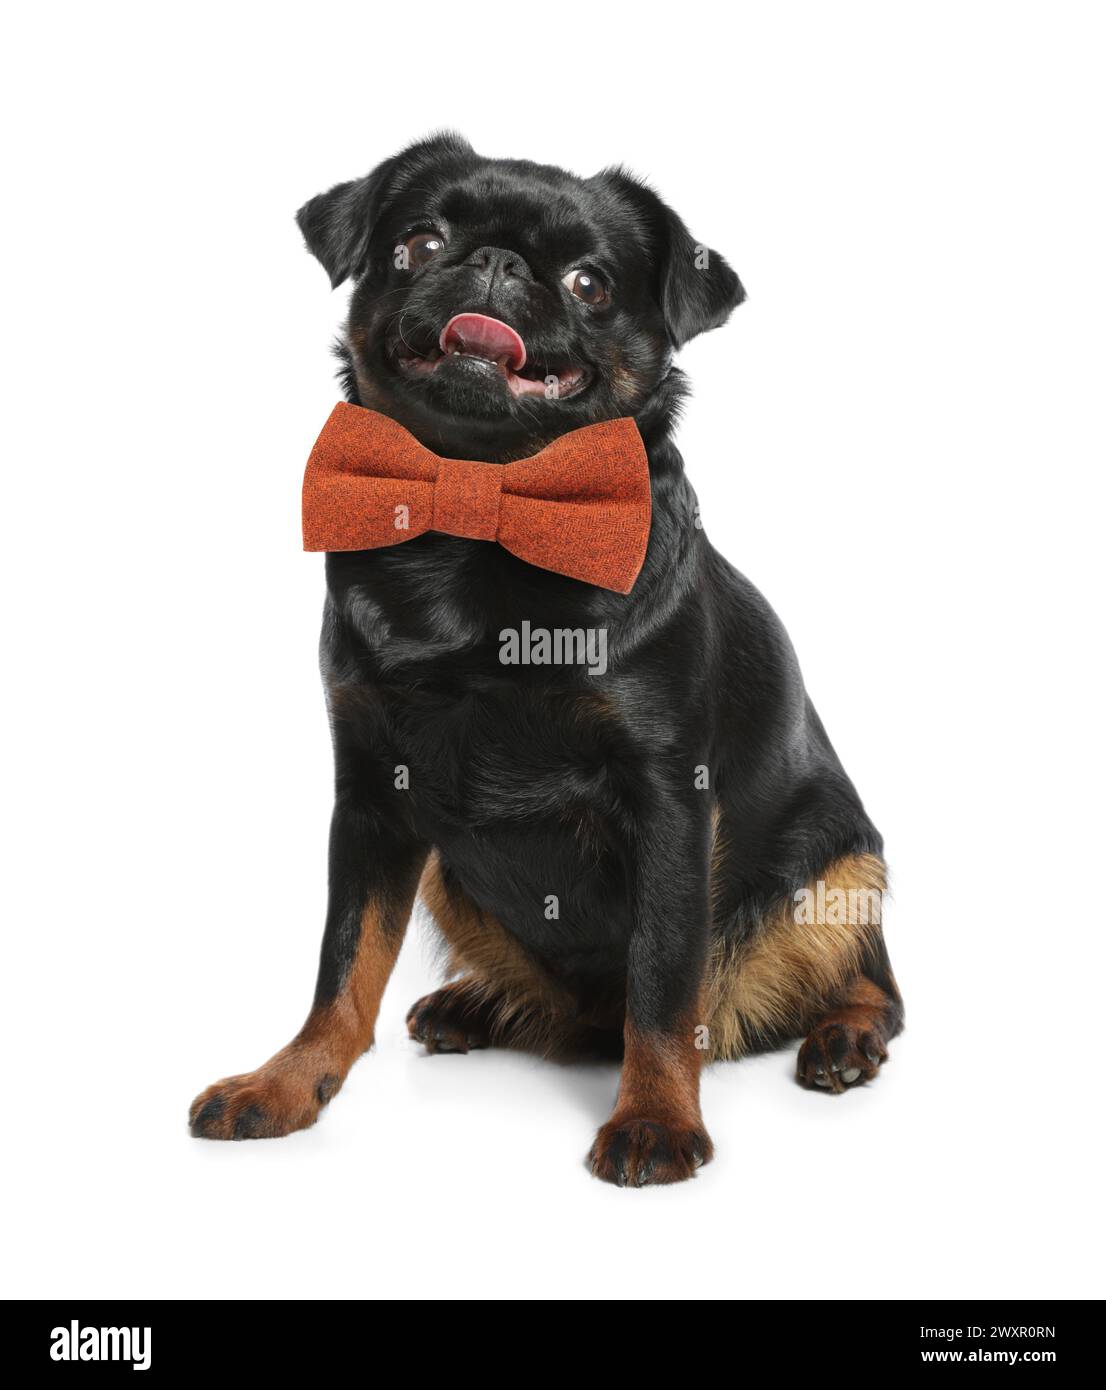 Adorable black Petit Brabancon dog with bow tie on white background Stock Photo